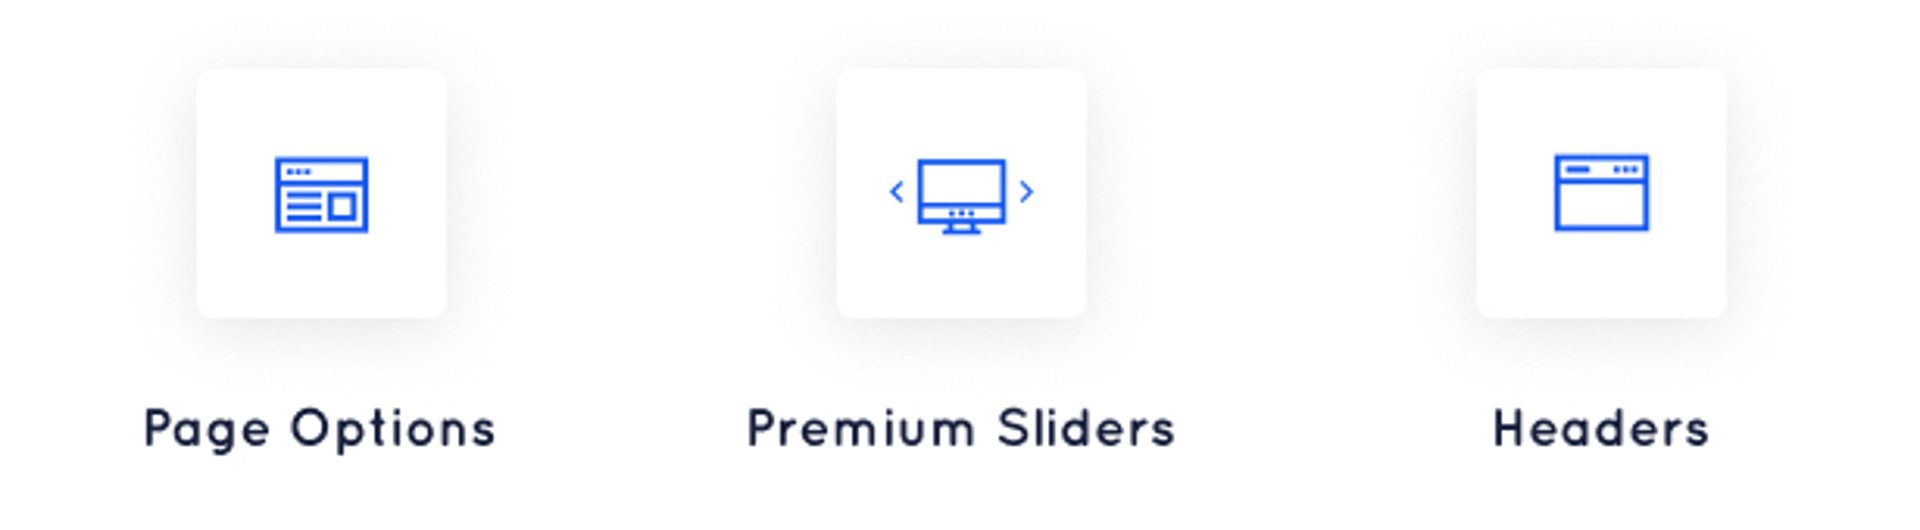 Shopaddict - 16 Ready WordPress Landing Pages Theme - Features | cmsmasters studio